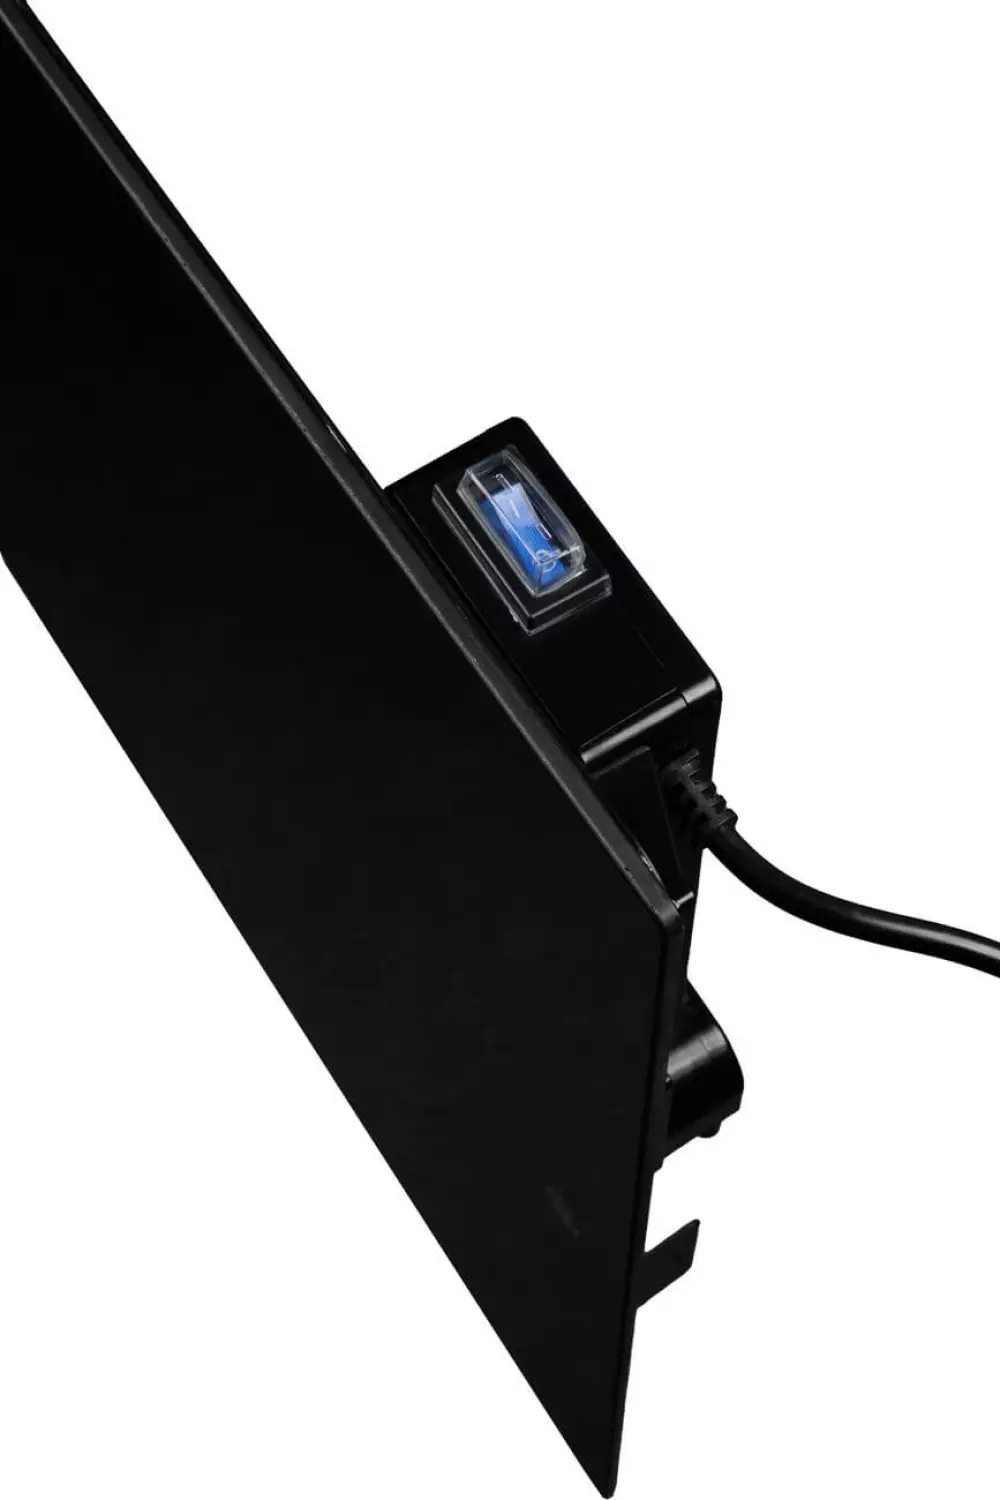 Eurom Sani 600 WiFi Panneau infrarouge noir - 600W - 11,1kg